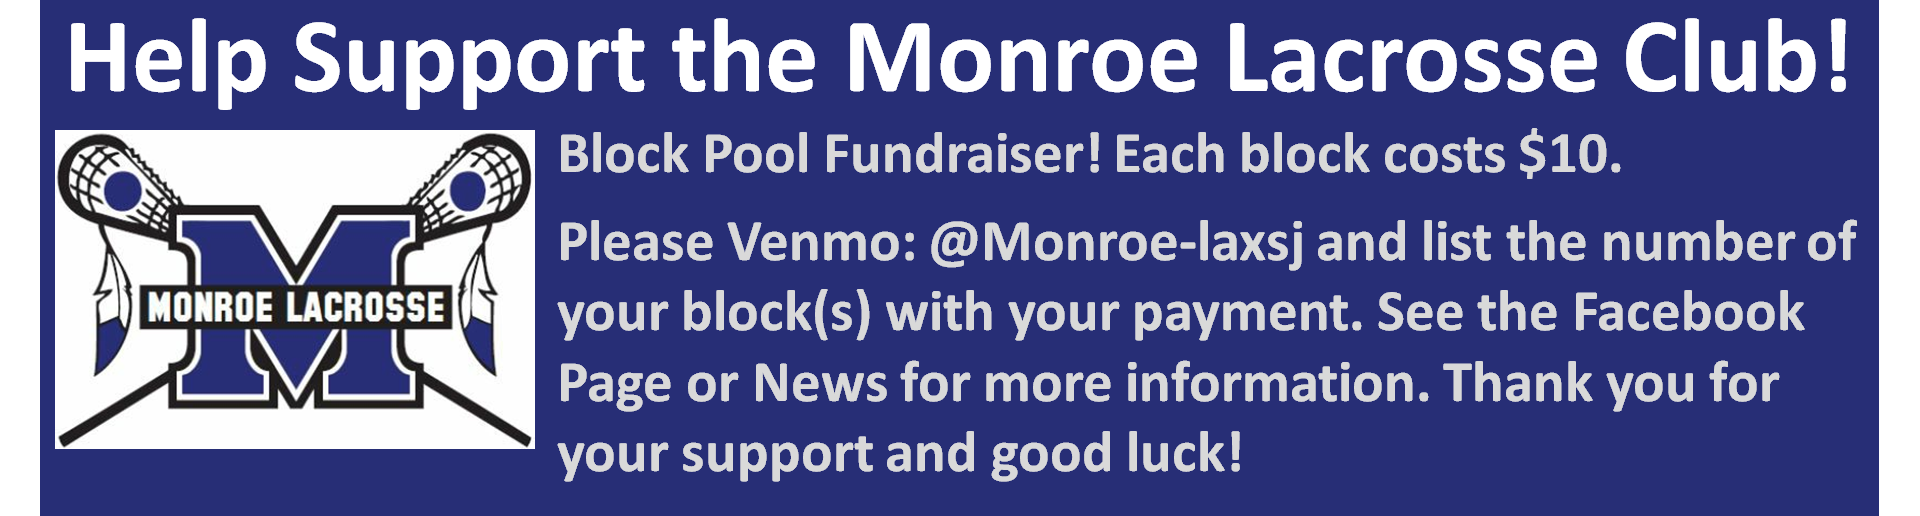 Block pool fundraiser